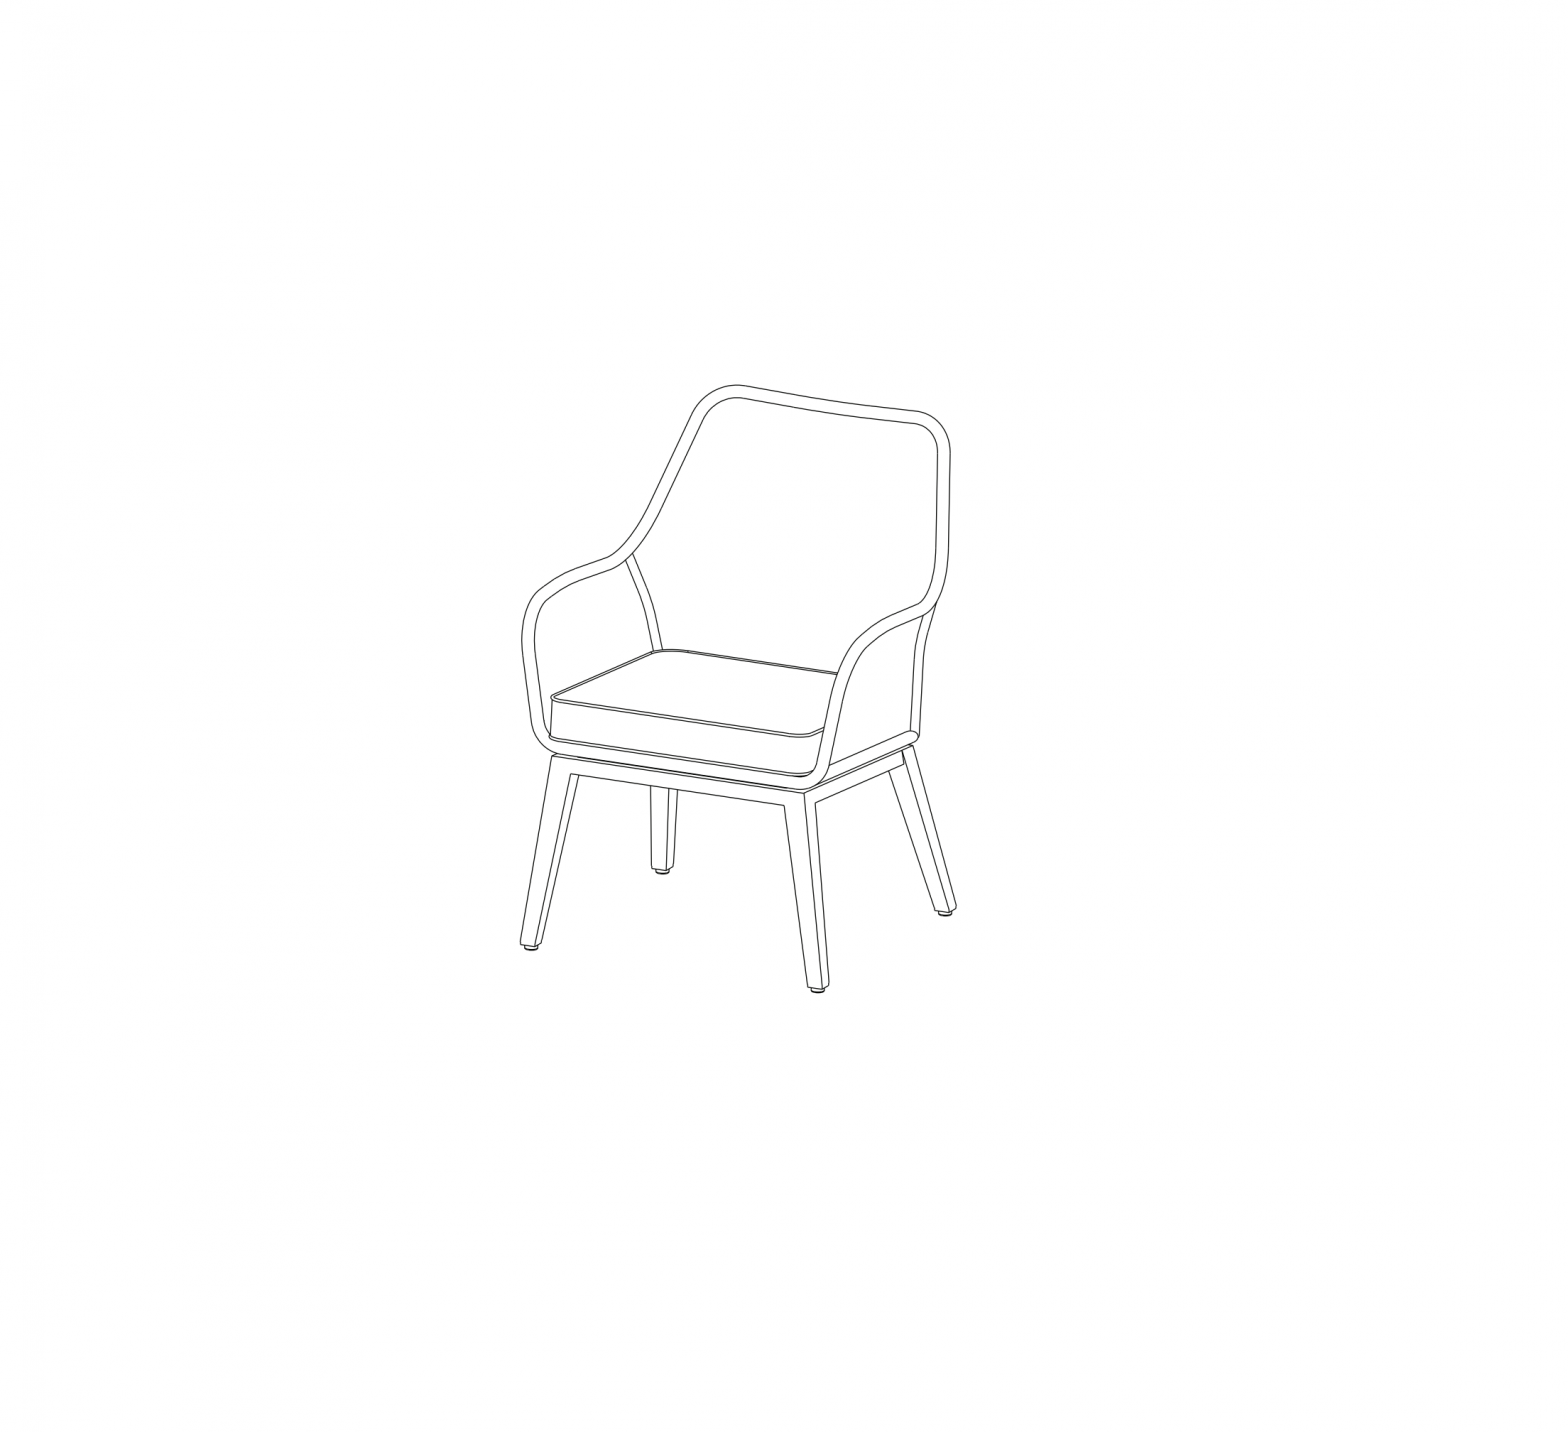 HAMPTON BAY FRS80961-2PK Haymont 2PK Steel Stationary Dining Chair User Guide